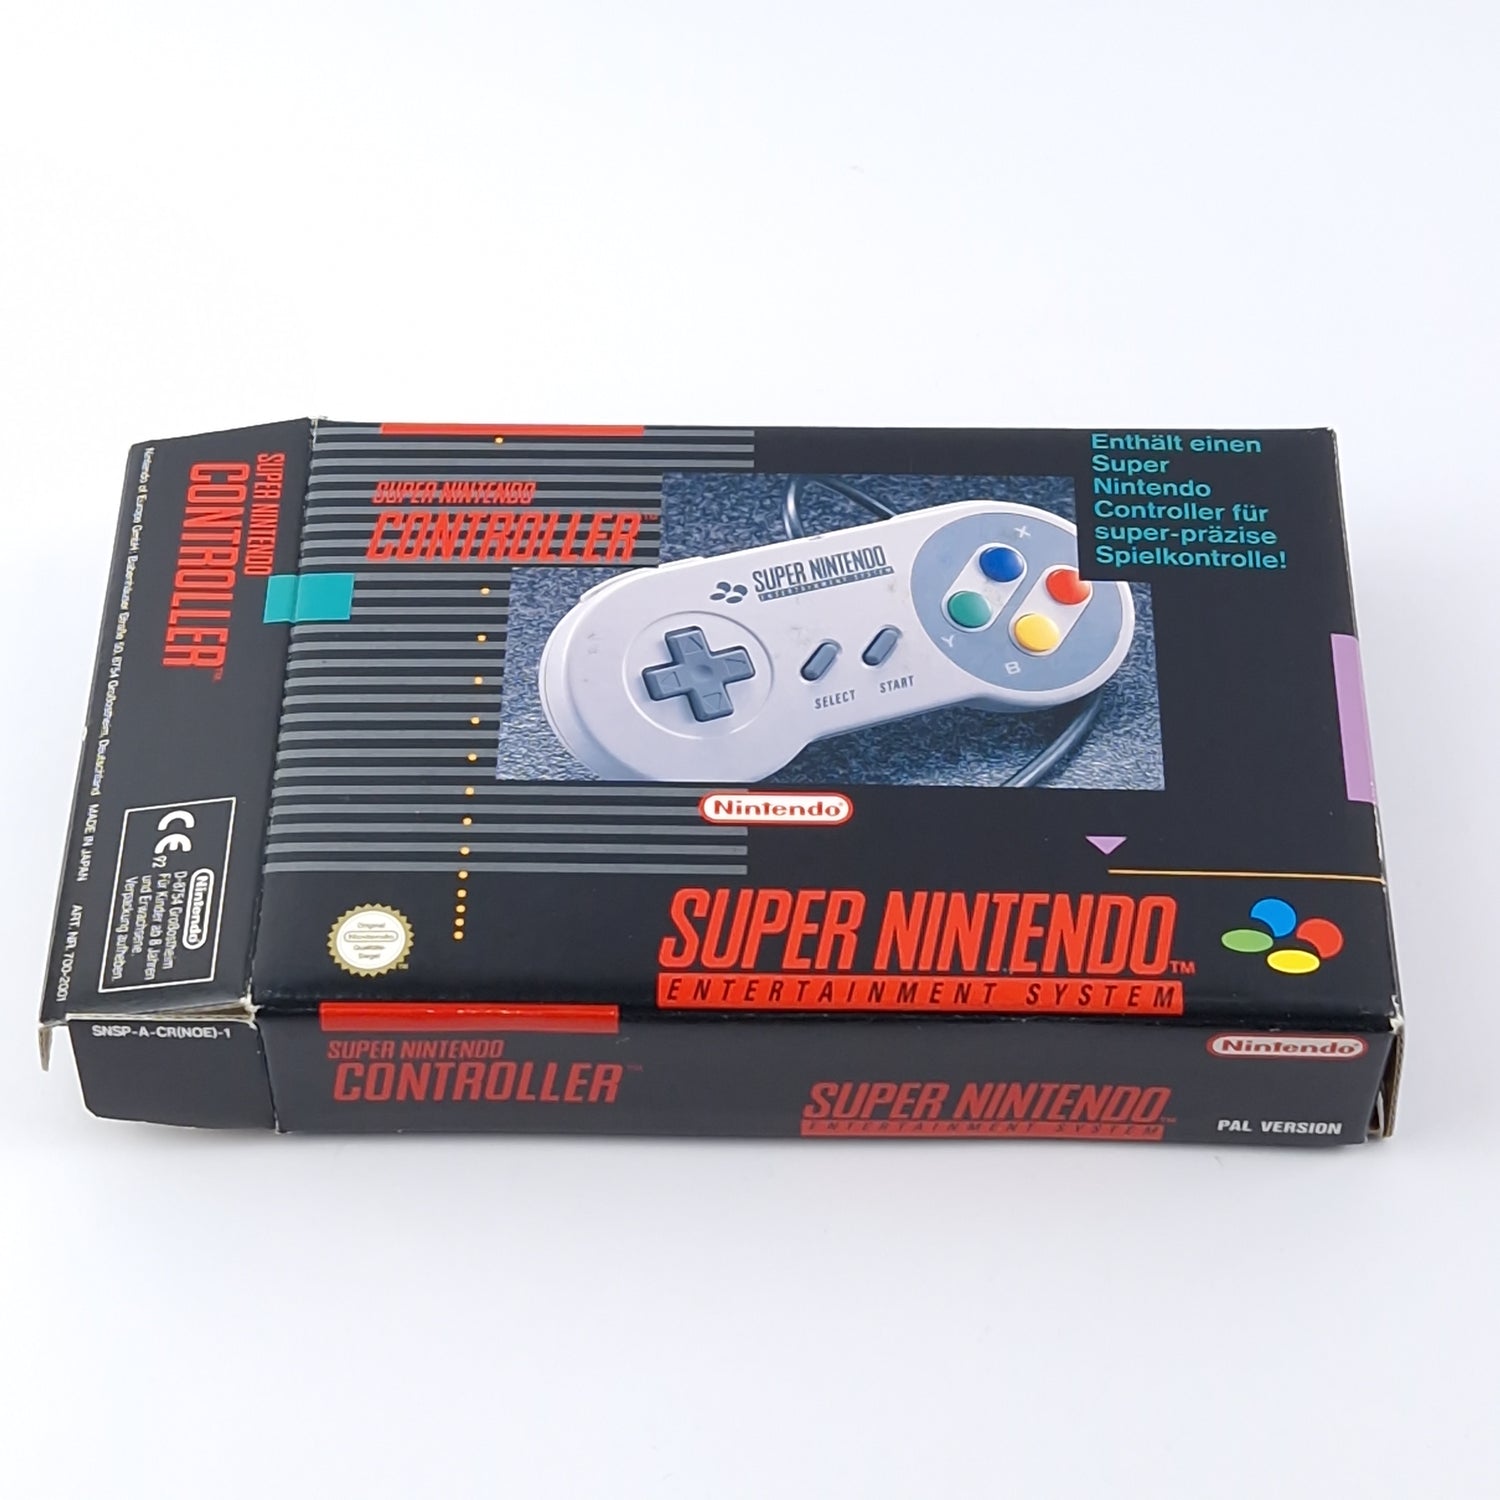 Original Super Nintendo Controller in OVP - SNES Gamepad PAL